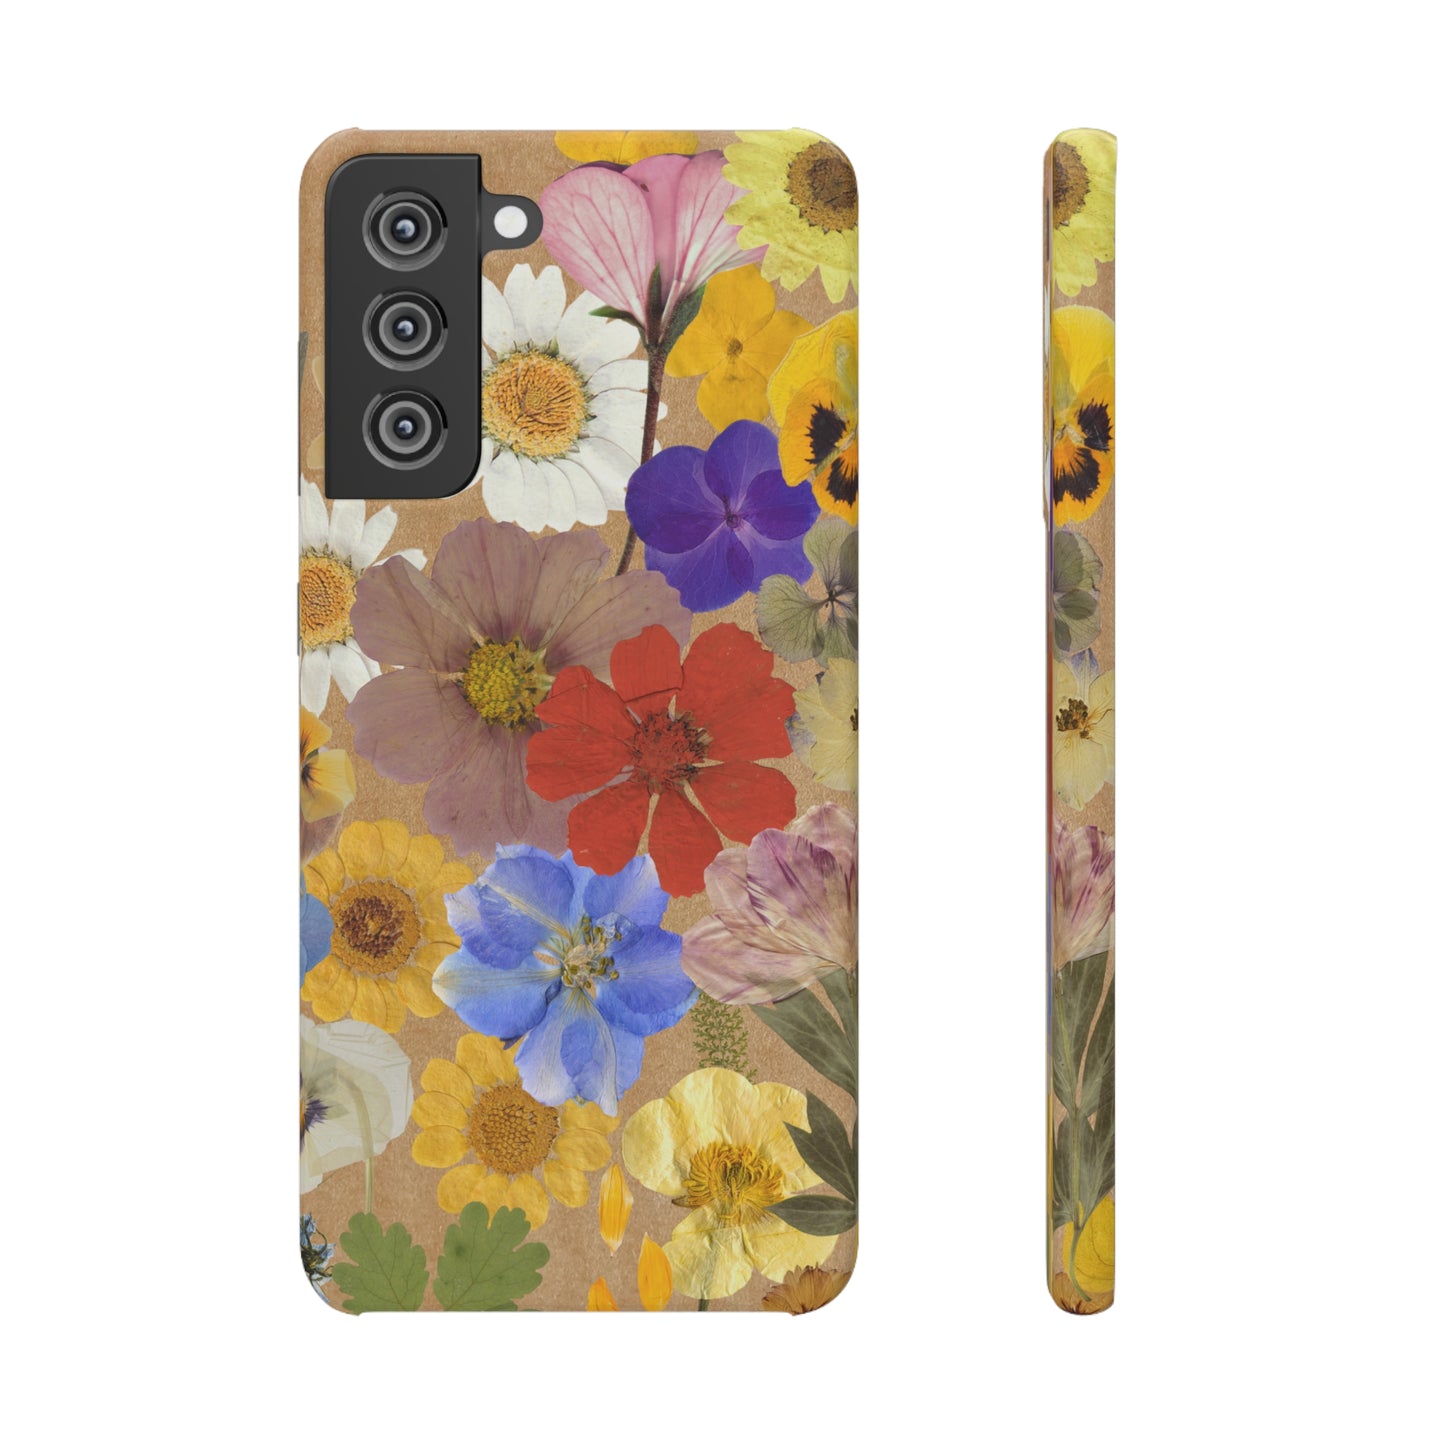 Pressed Flowers Phone Cases